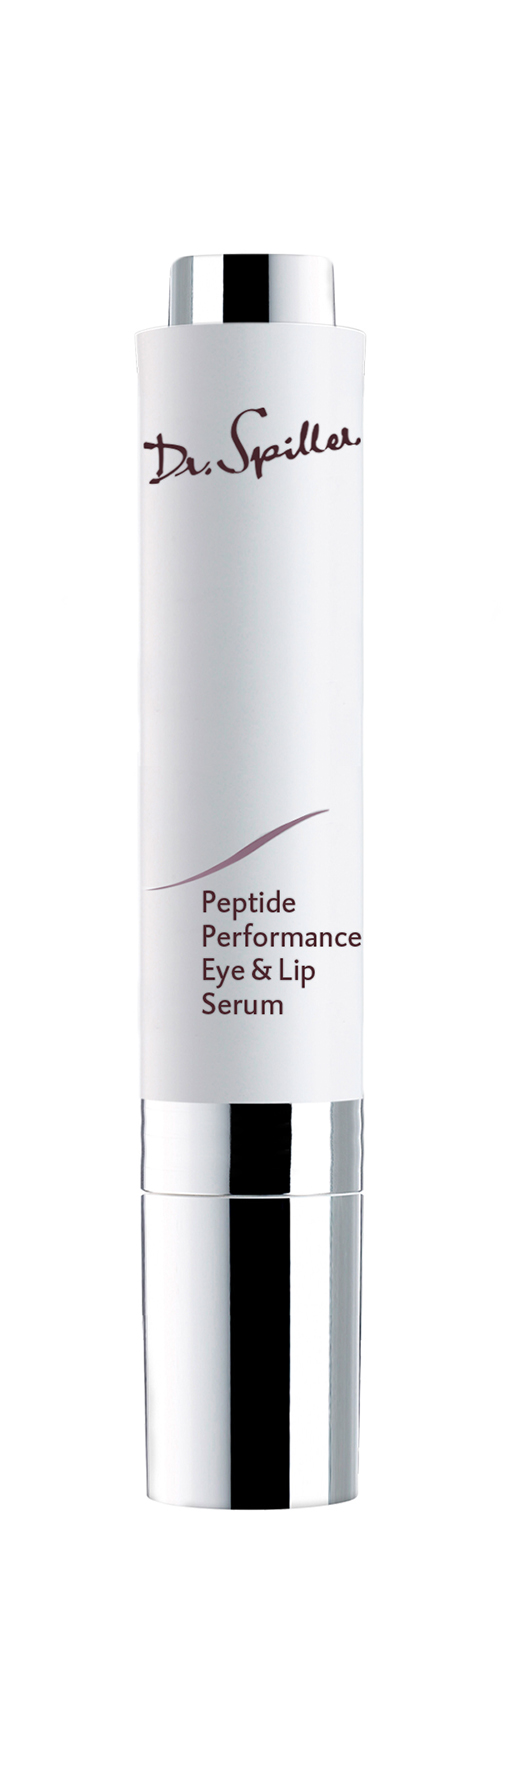 Peptide Performance Eye & Lip Serum 10 ml